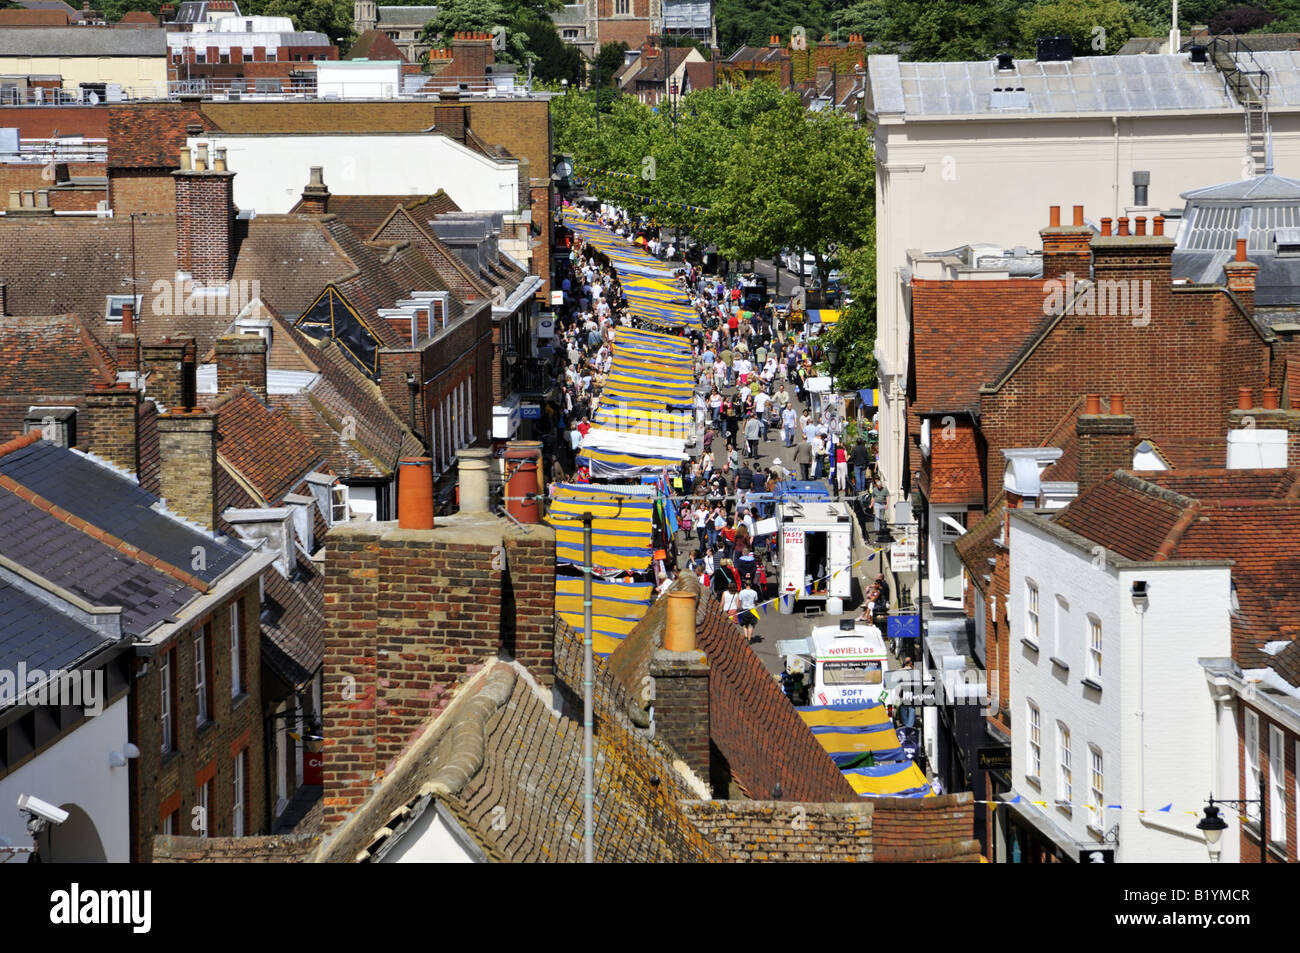 Saturday market at St Albans Hertfordshire UK Stock Photo